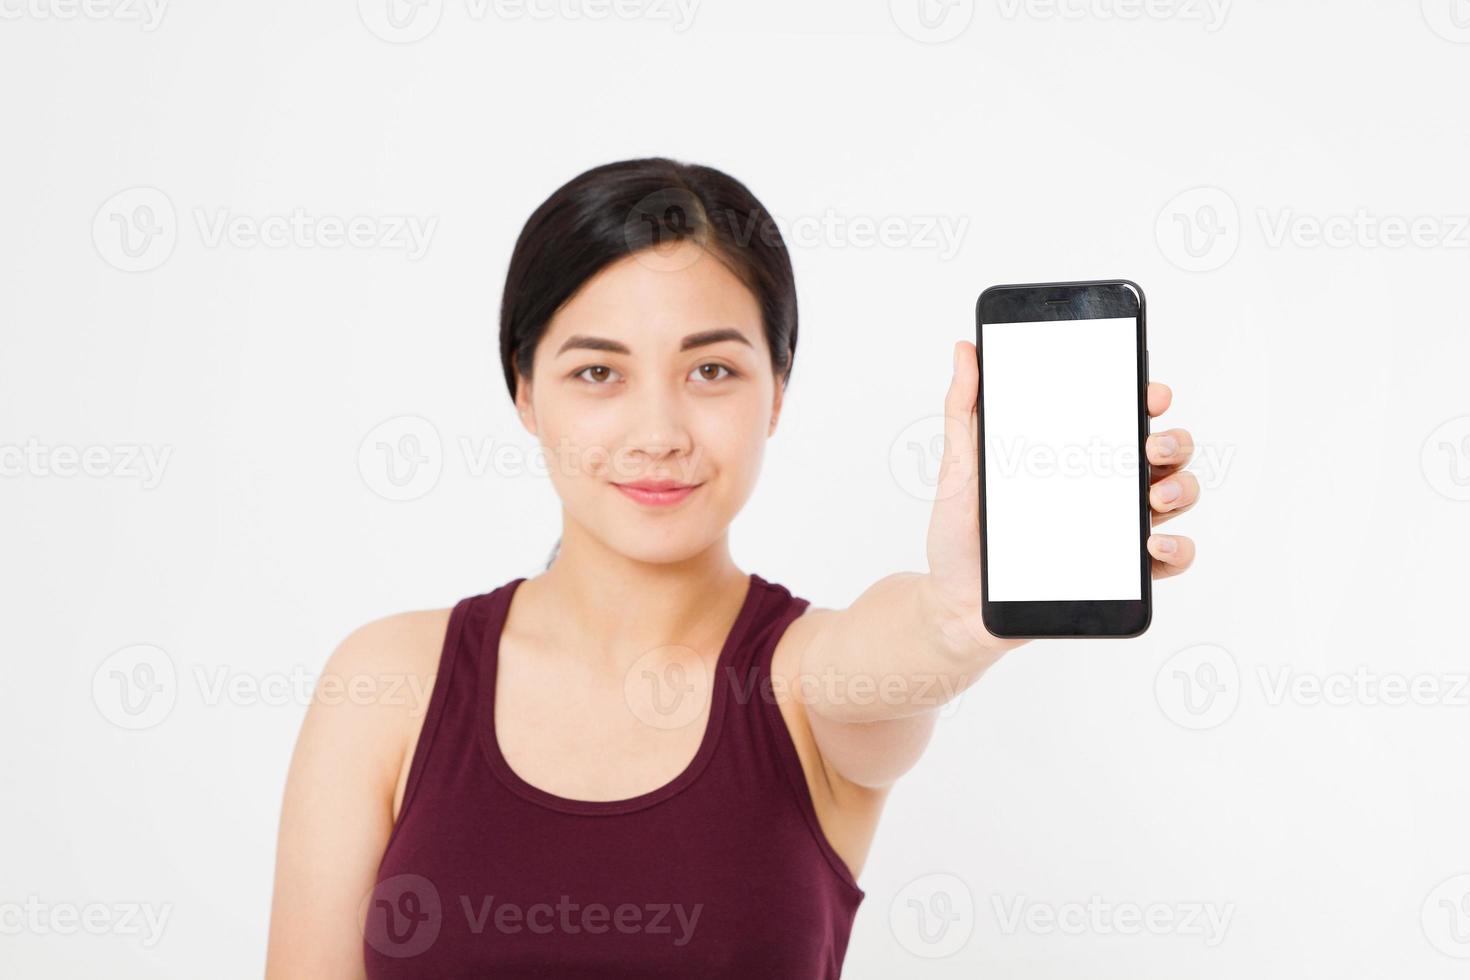 leende asiatisk, japansk kvinna håller svart smartphone, mobiltelefon isolerad på vit bakgrund. selektiv fokusering. kopieringsutrymme. foto